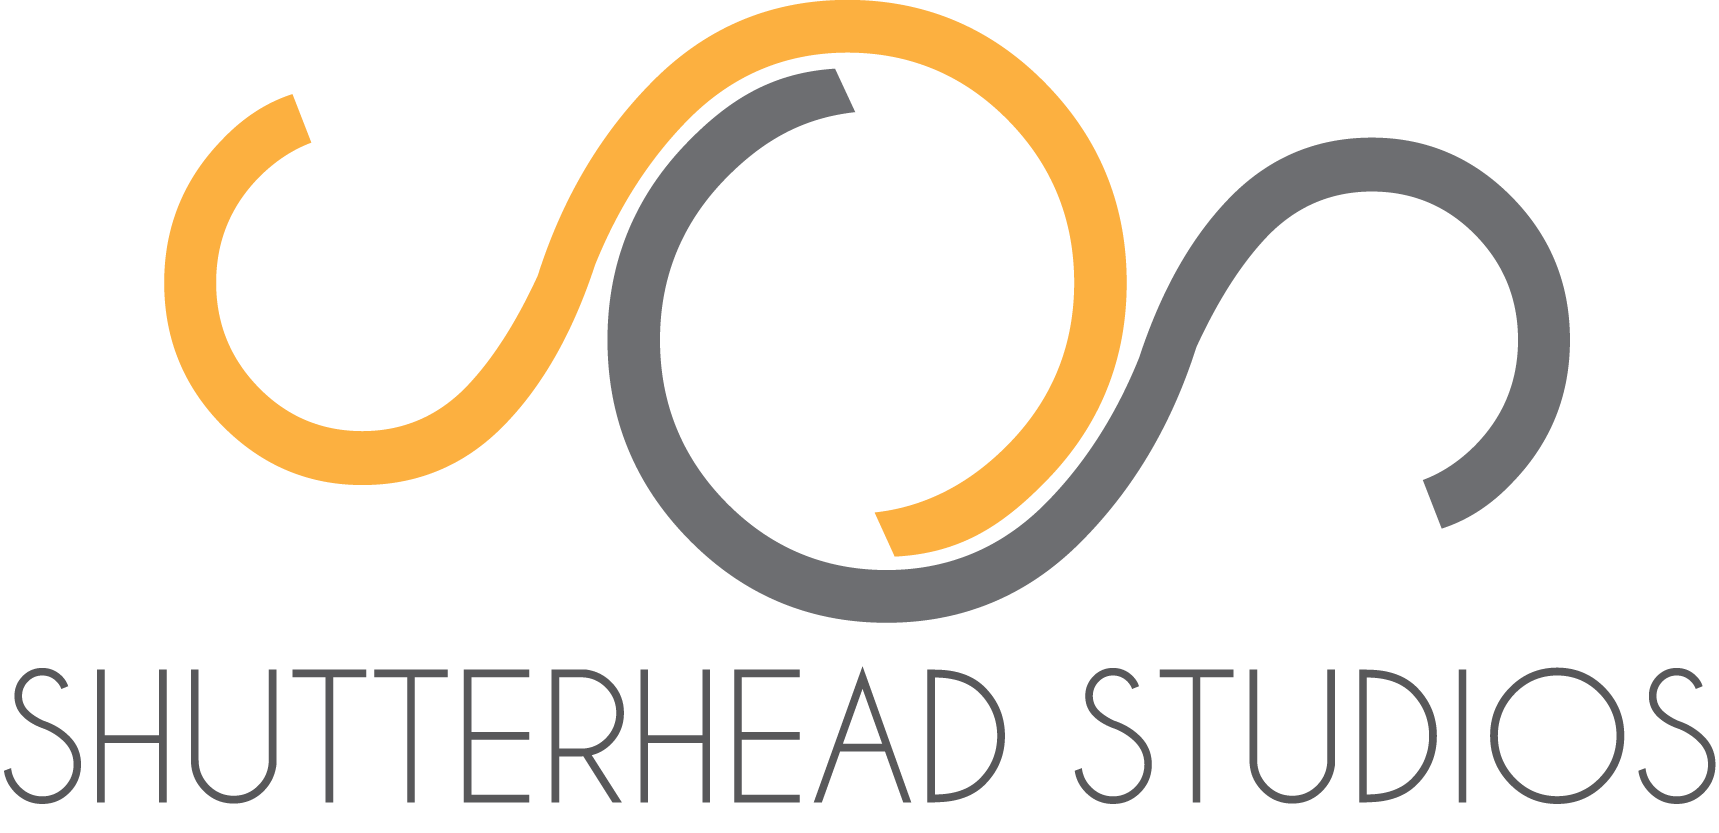 Shutterhead Studios Logo